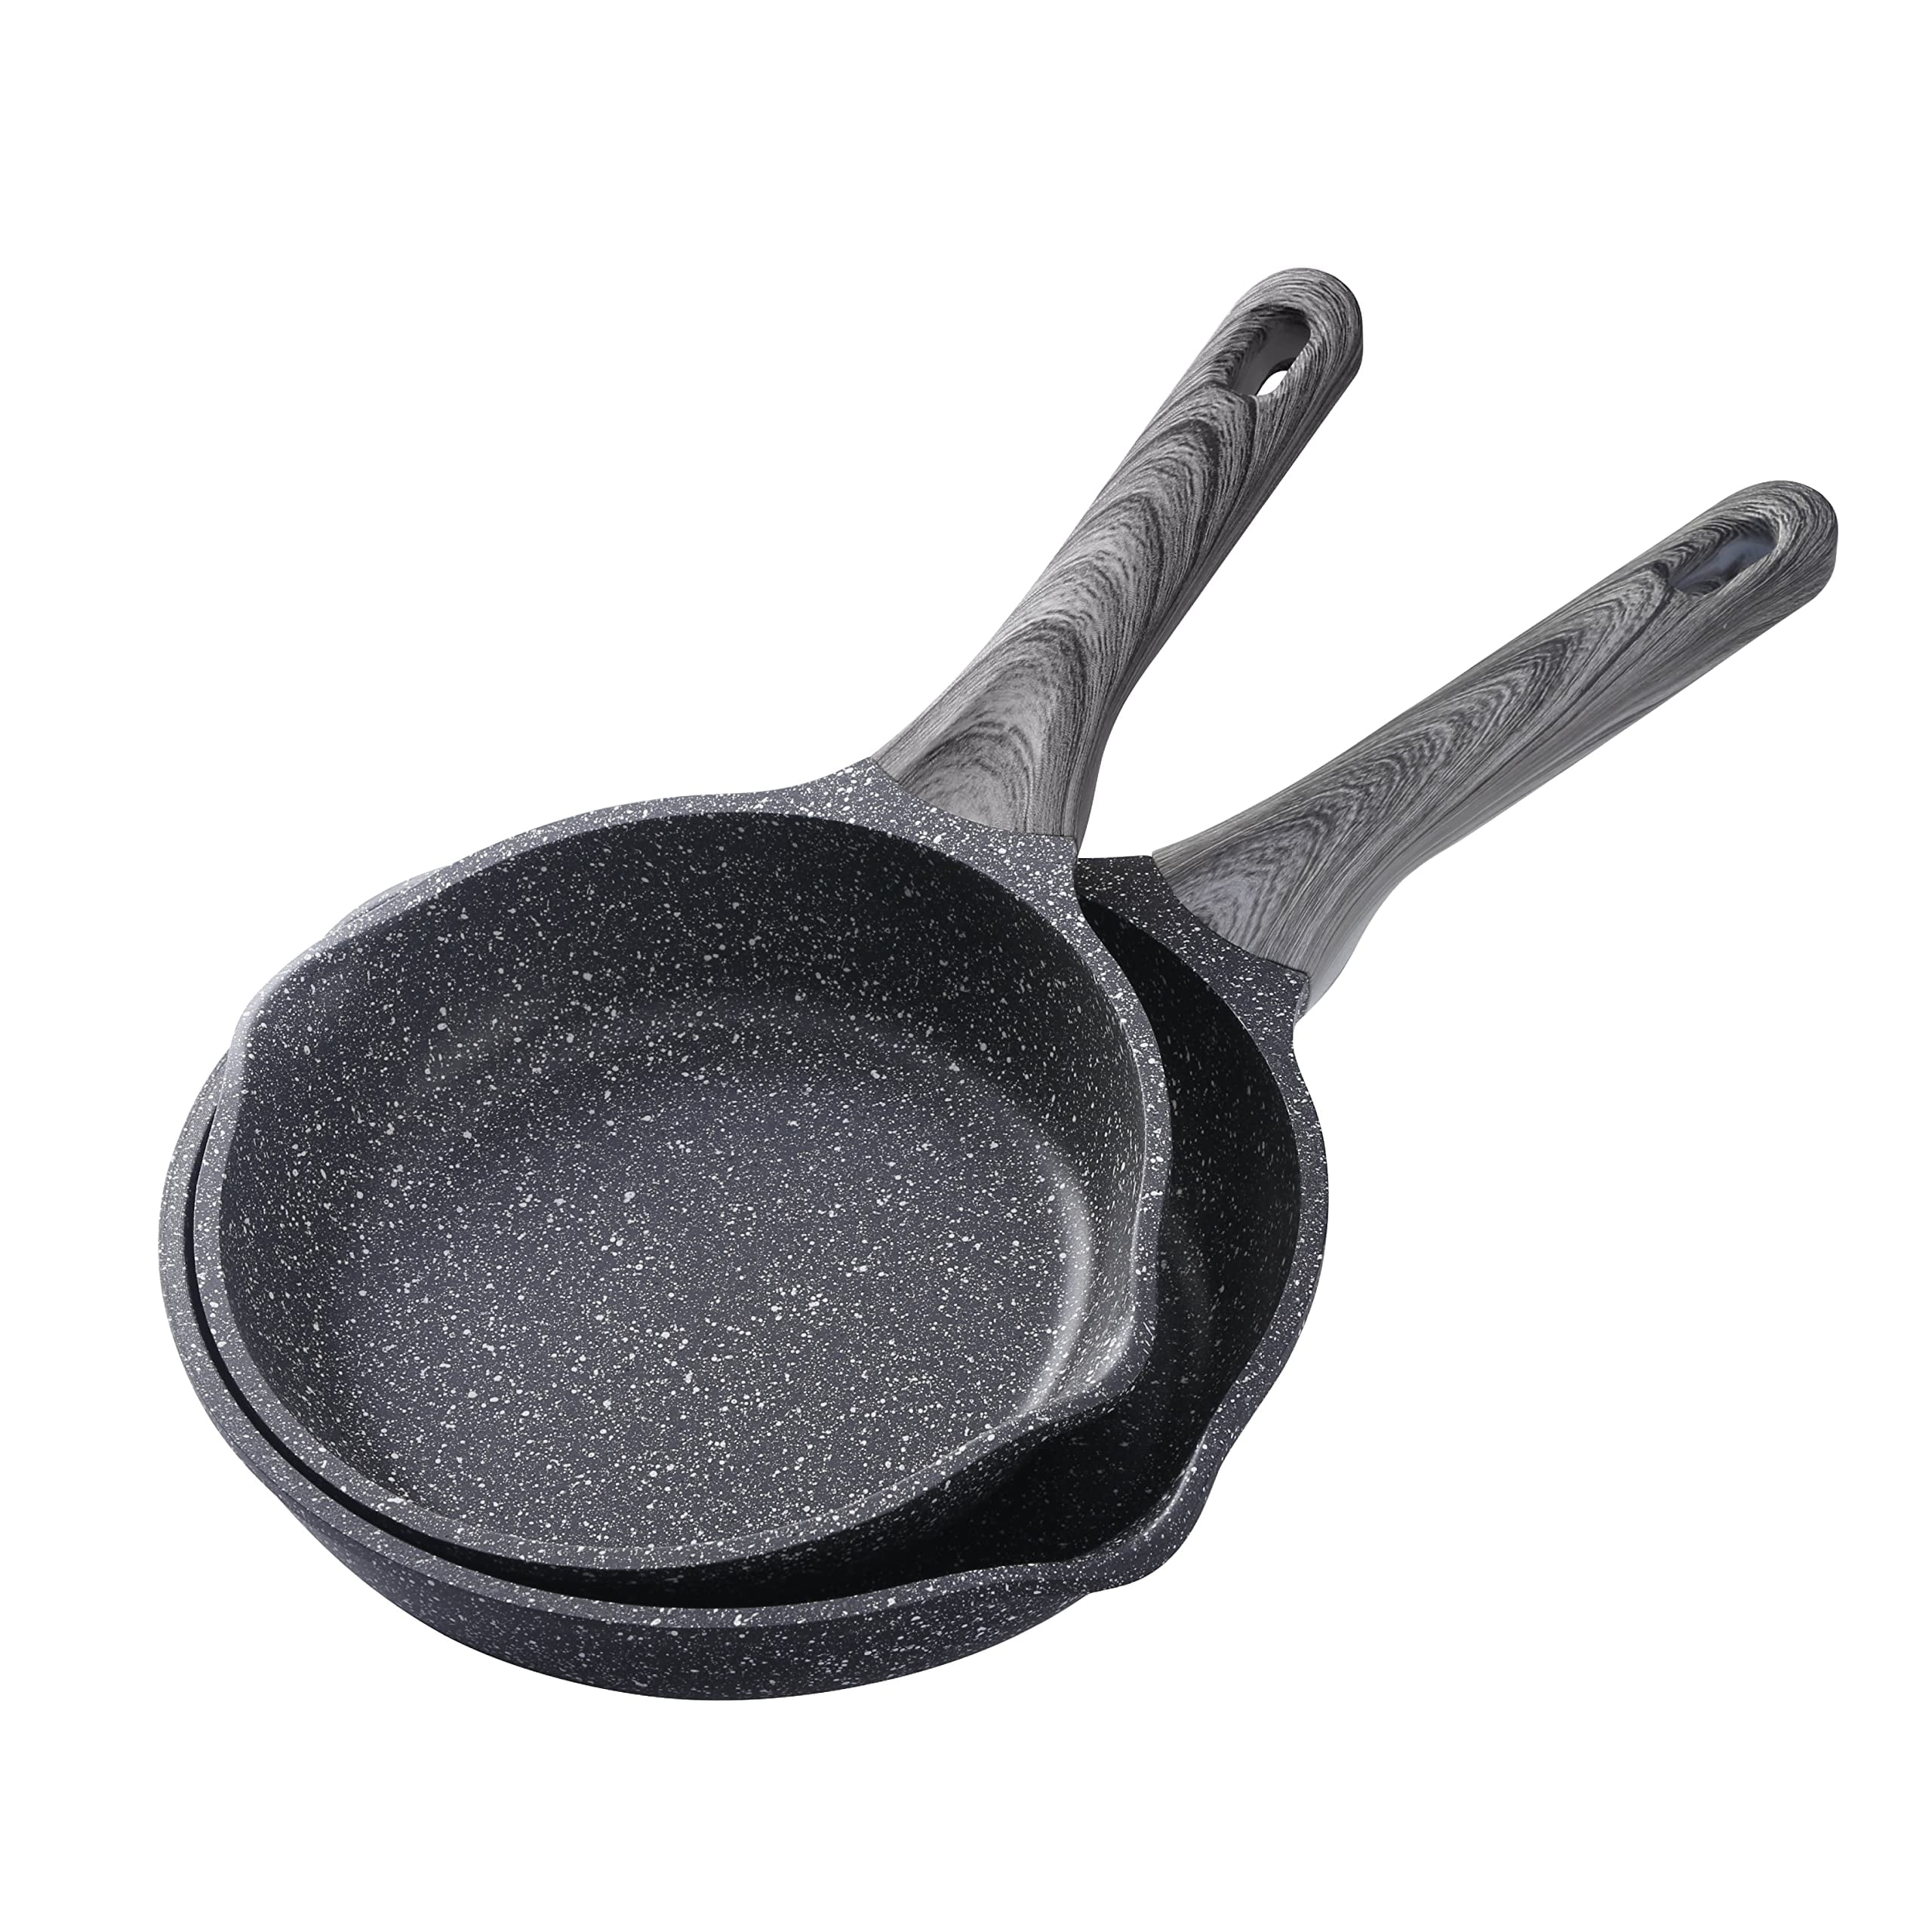 Country Kitchen Nonstick Frying Pans, 2 Piece Nonstick Cast Aluminum Pan,  Black 